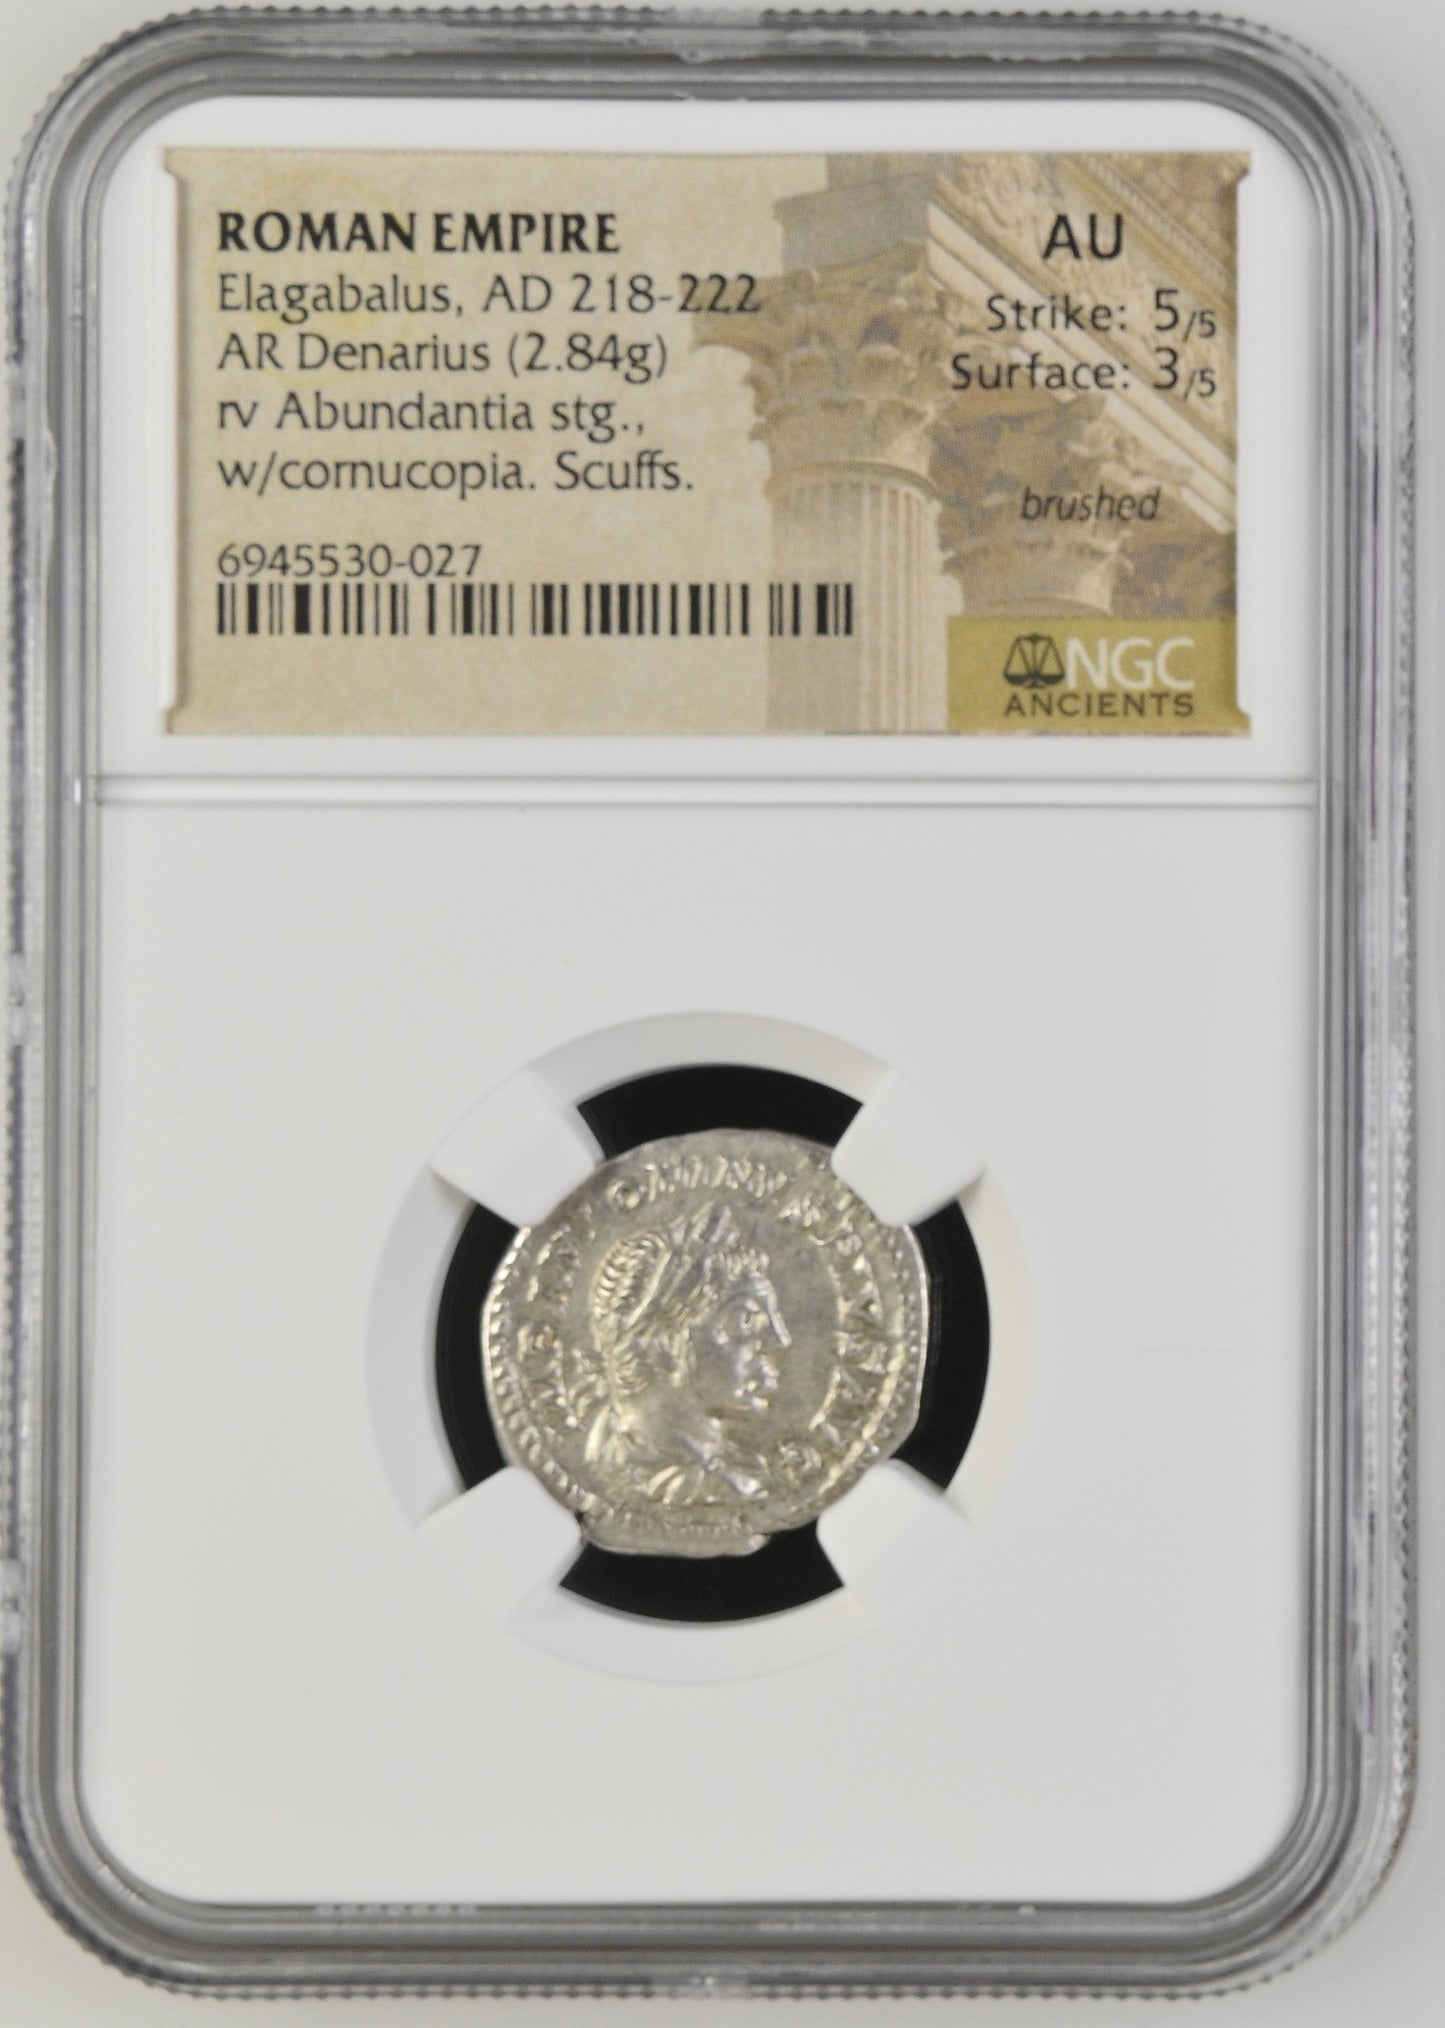 Roman Empire - Elagabalus - Silver Denarius - NGC AU - RIC:56